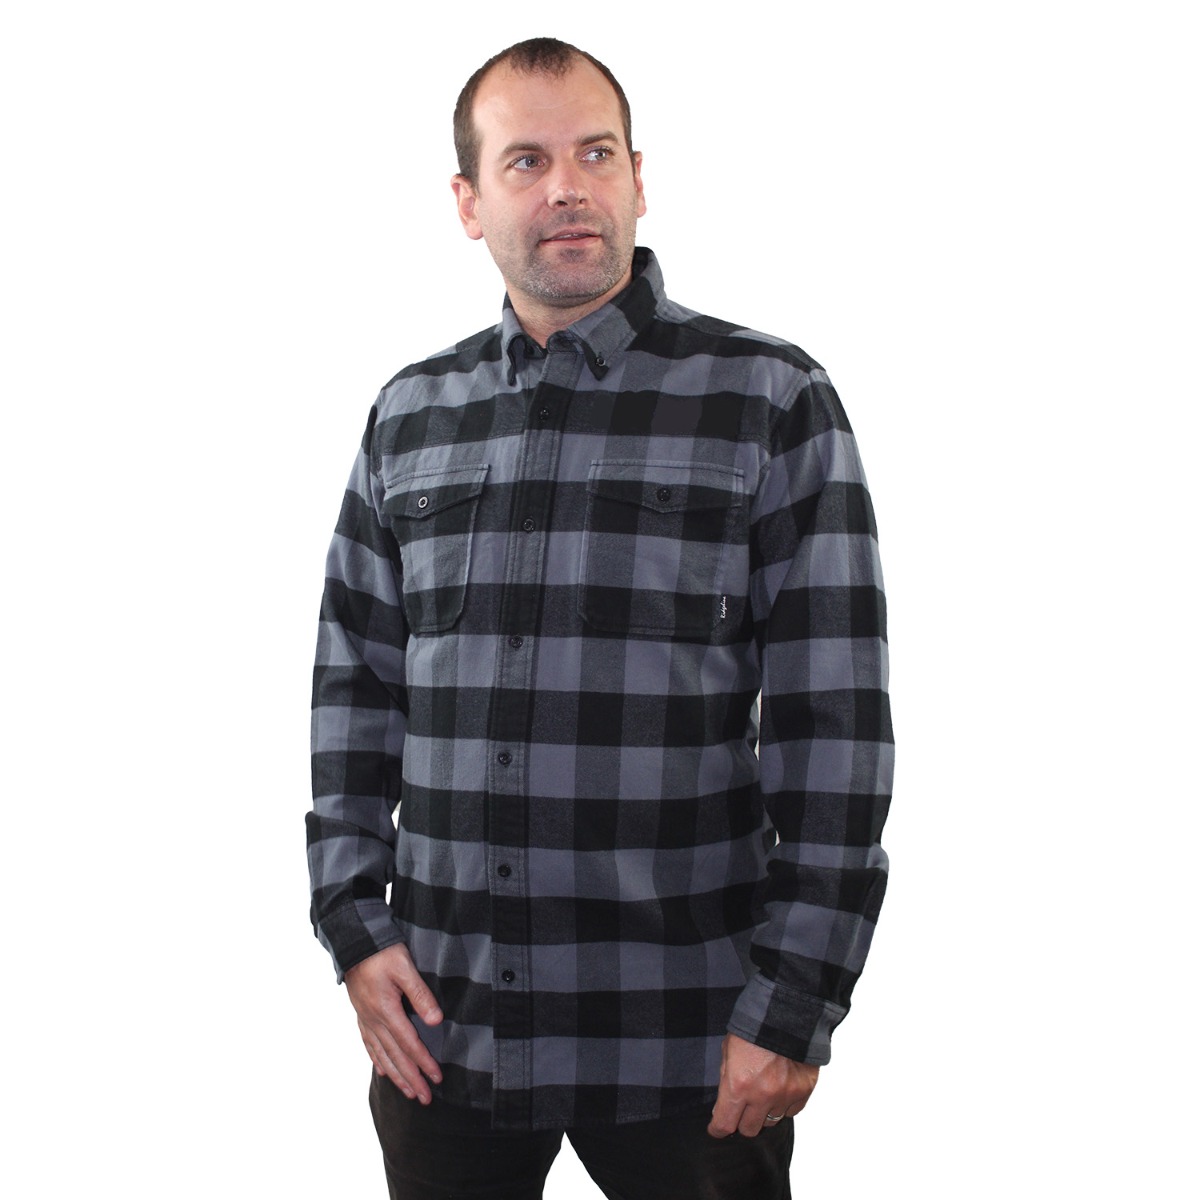 Ridgeline Check Flannel shirt front